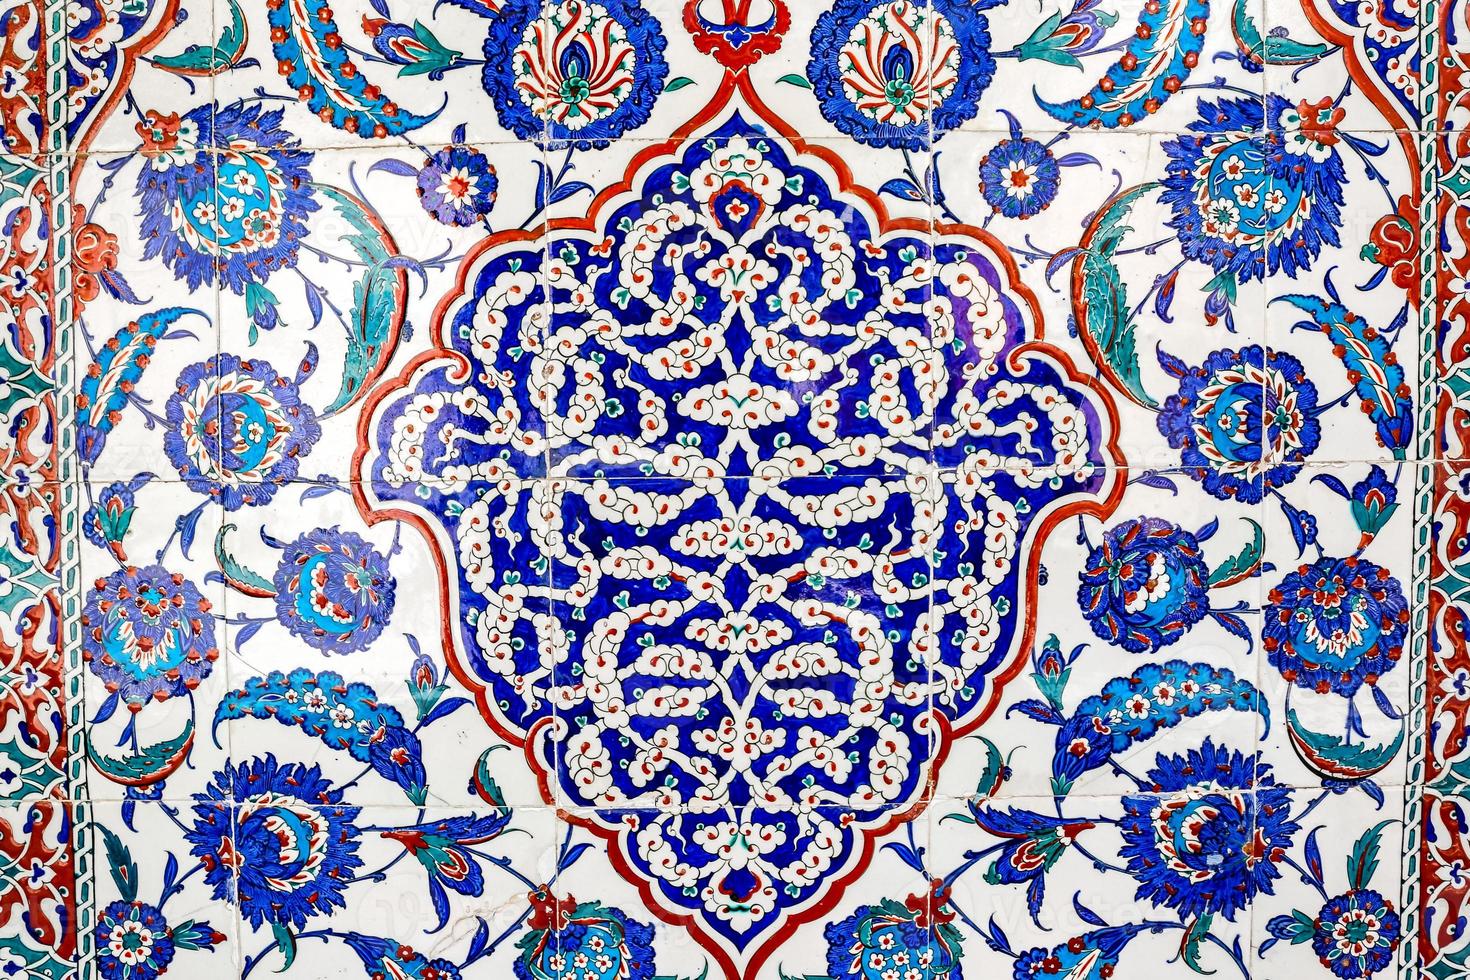 azulejos azuis turcos foto